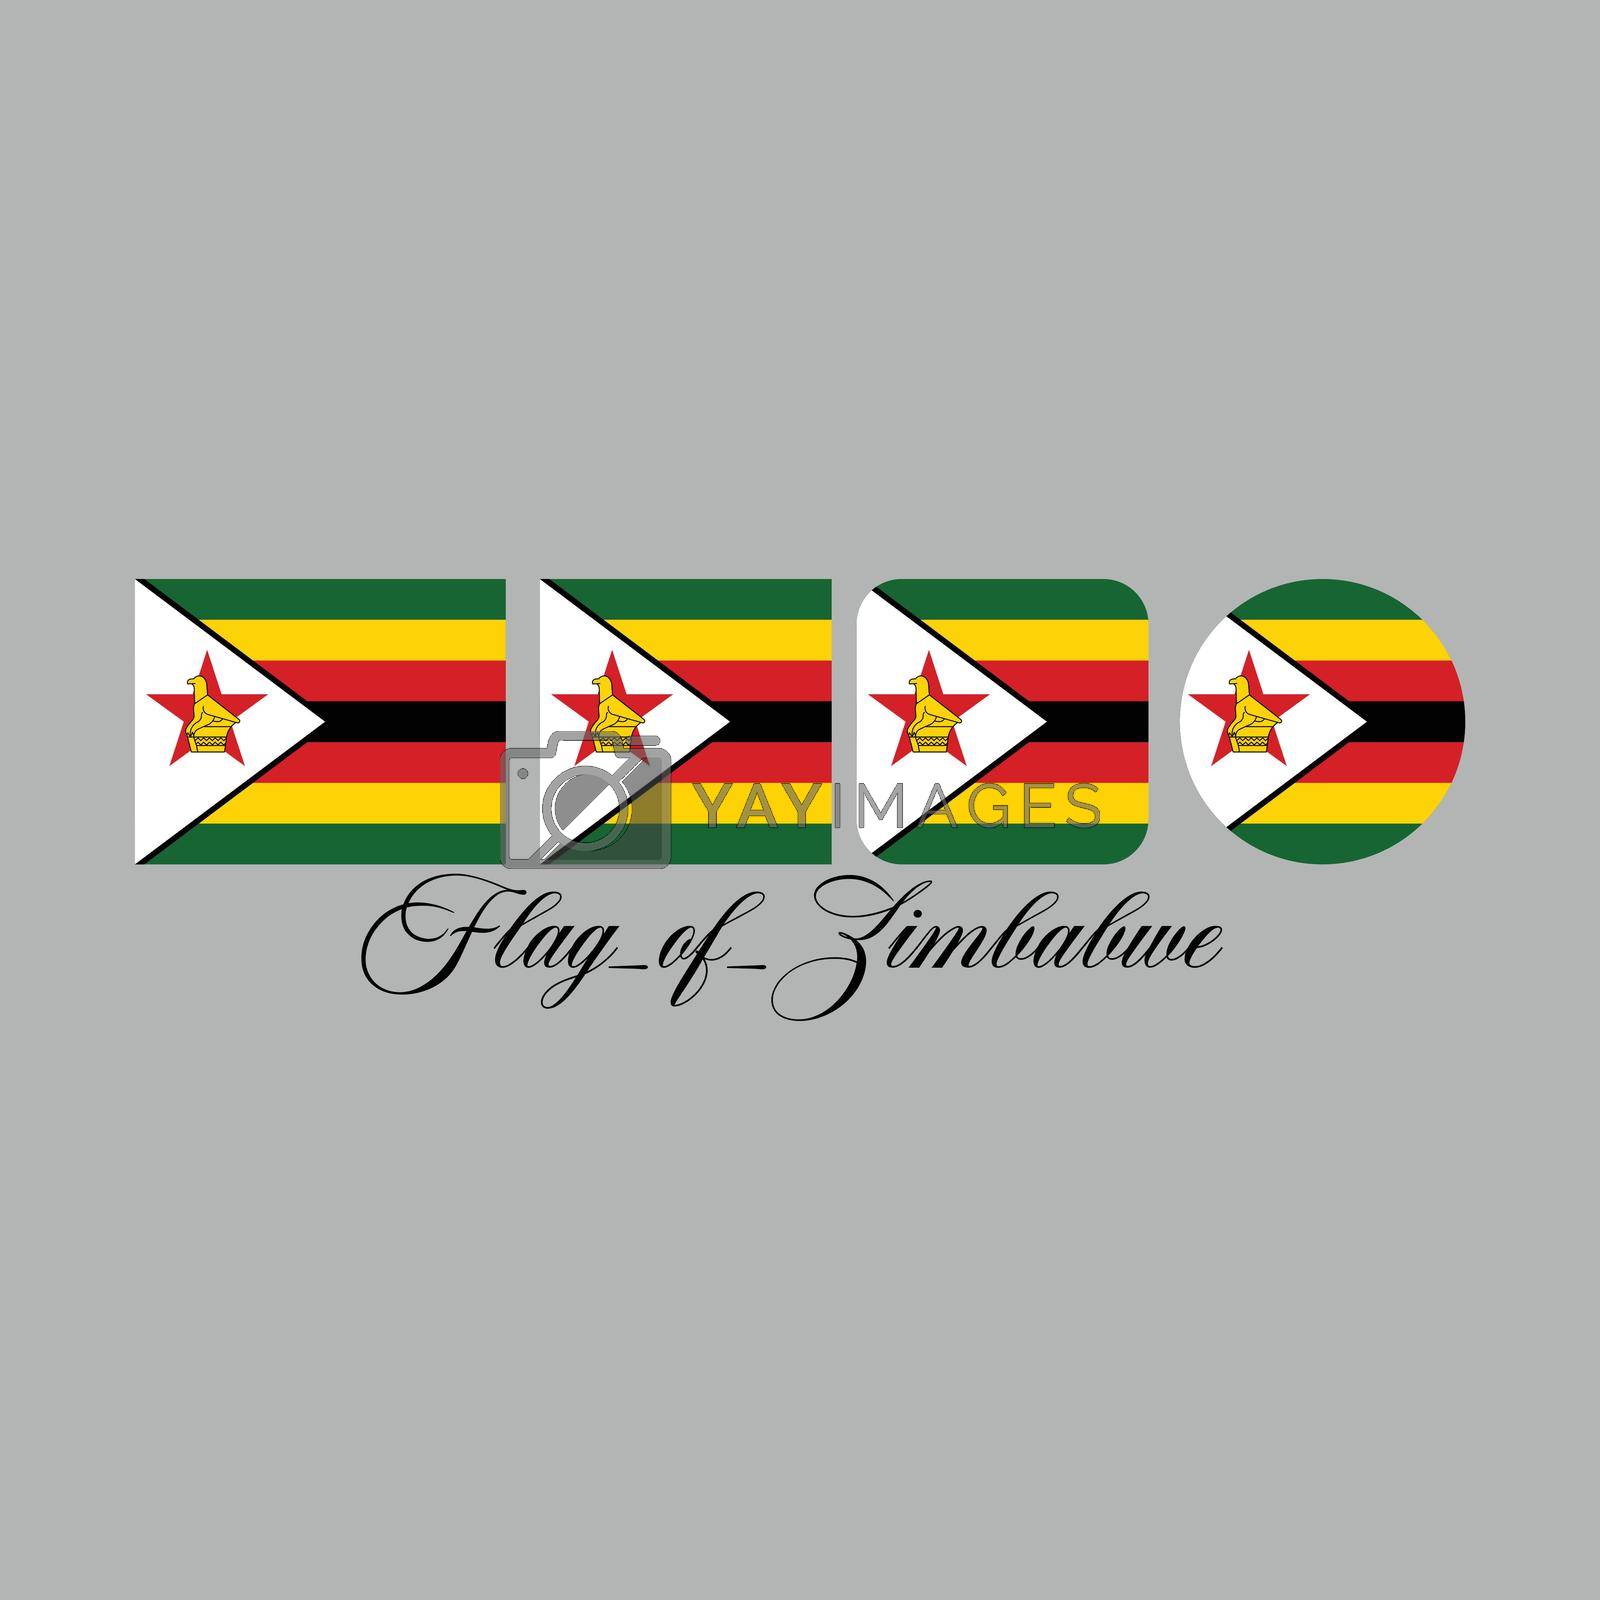 Royalty free image of flag of zimbabwe nation design artwork by Menyoen